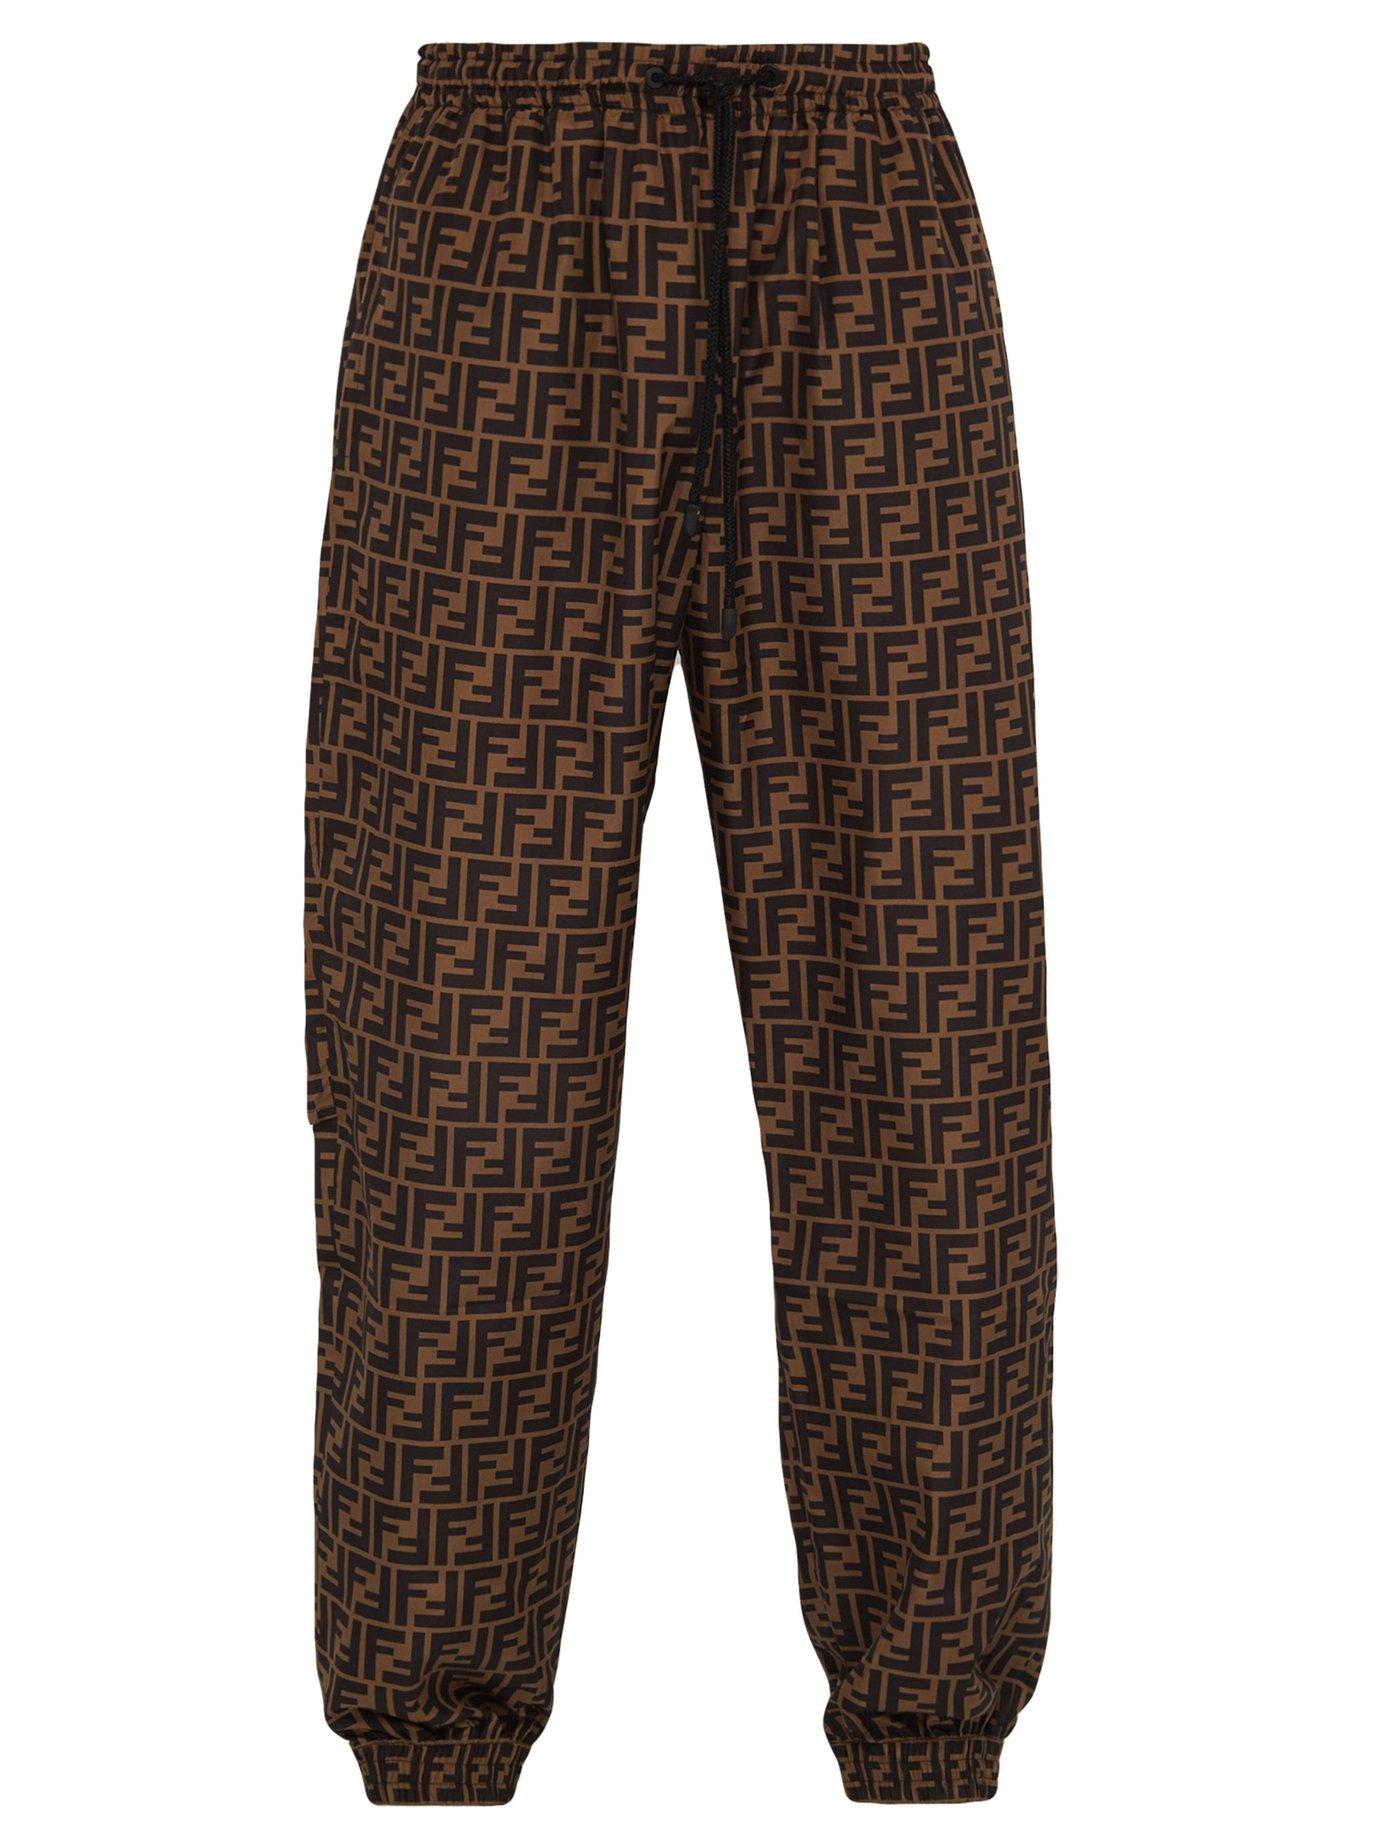 Fendi Ff Logo Track Pants in Brown for Men - Lyst